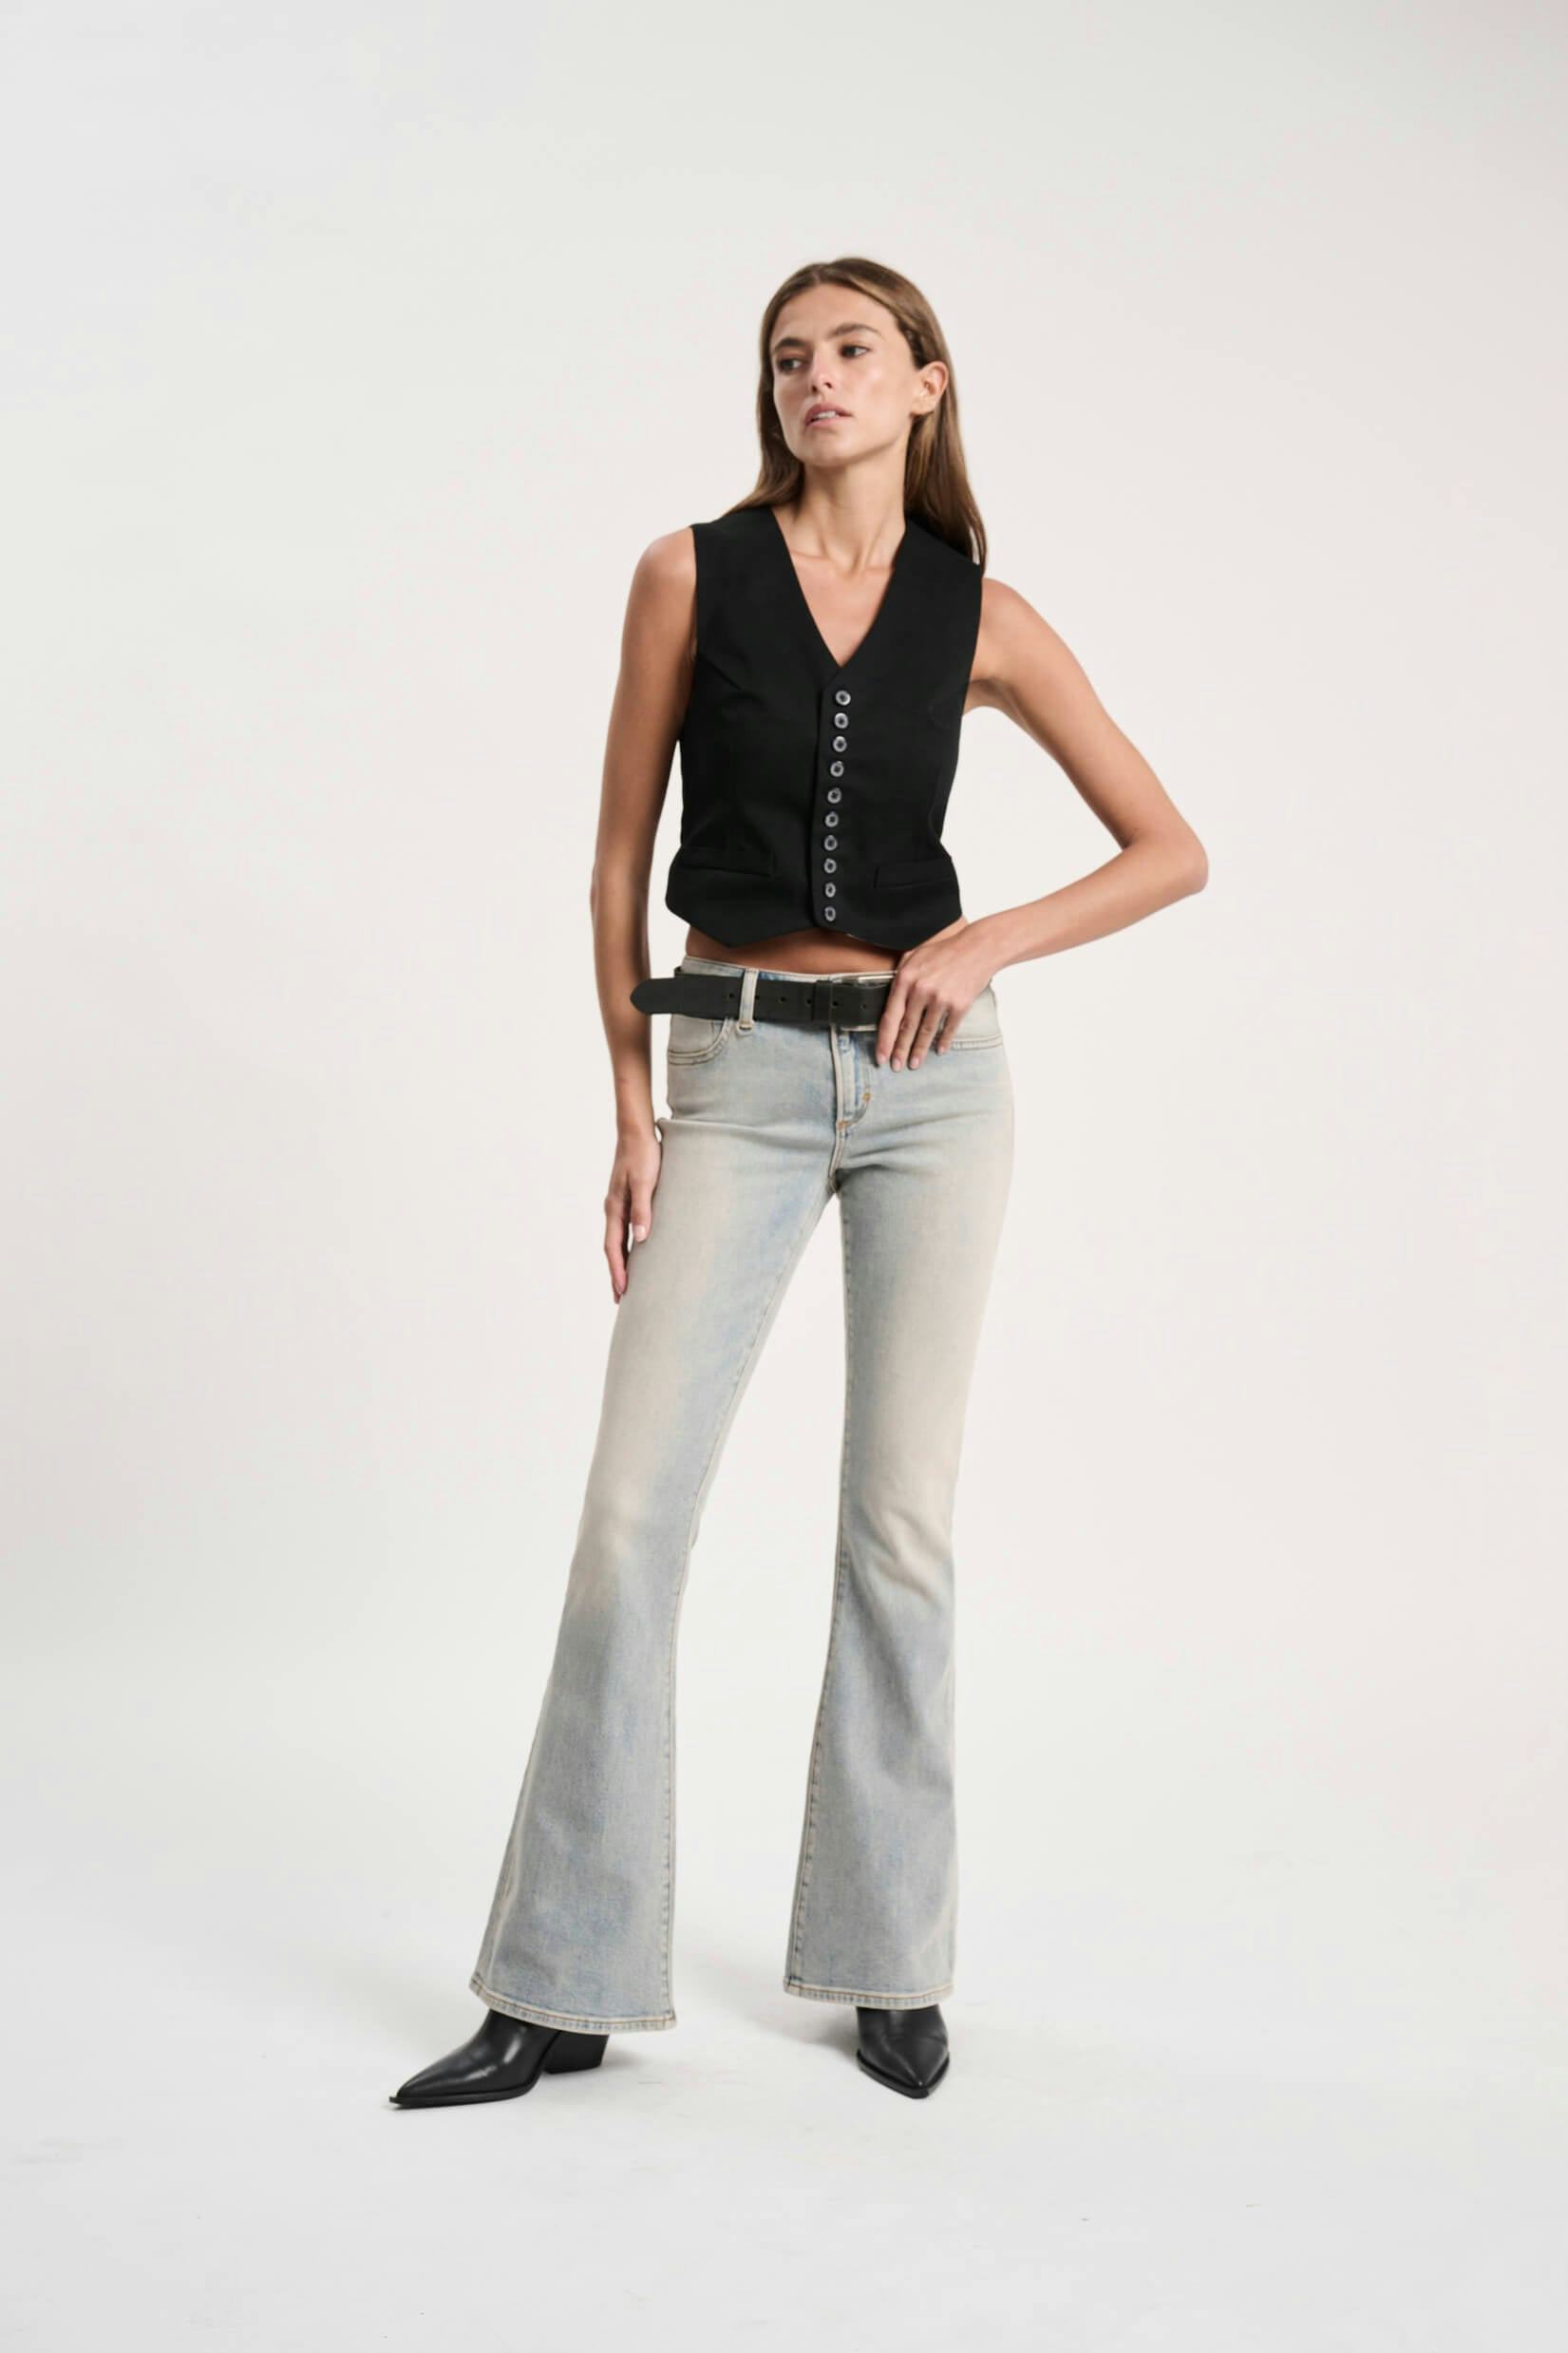 Devon Kick - Mission Neuw light grey womens-jeans 